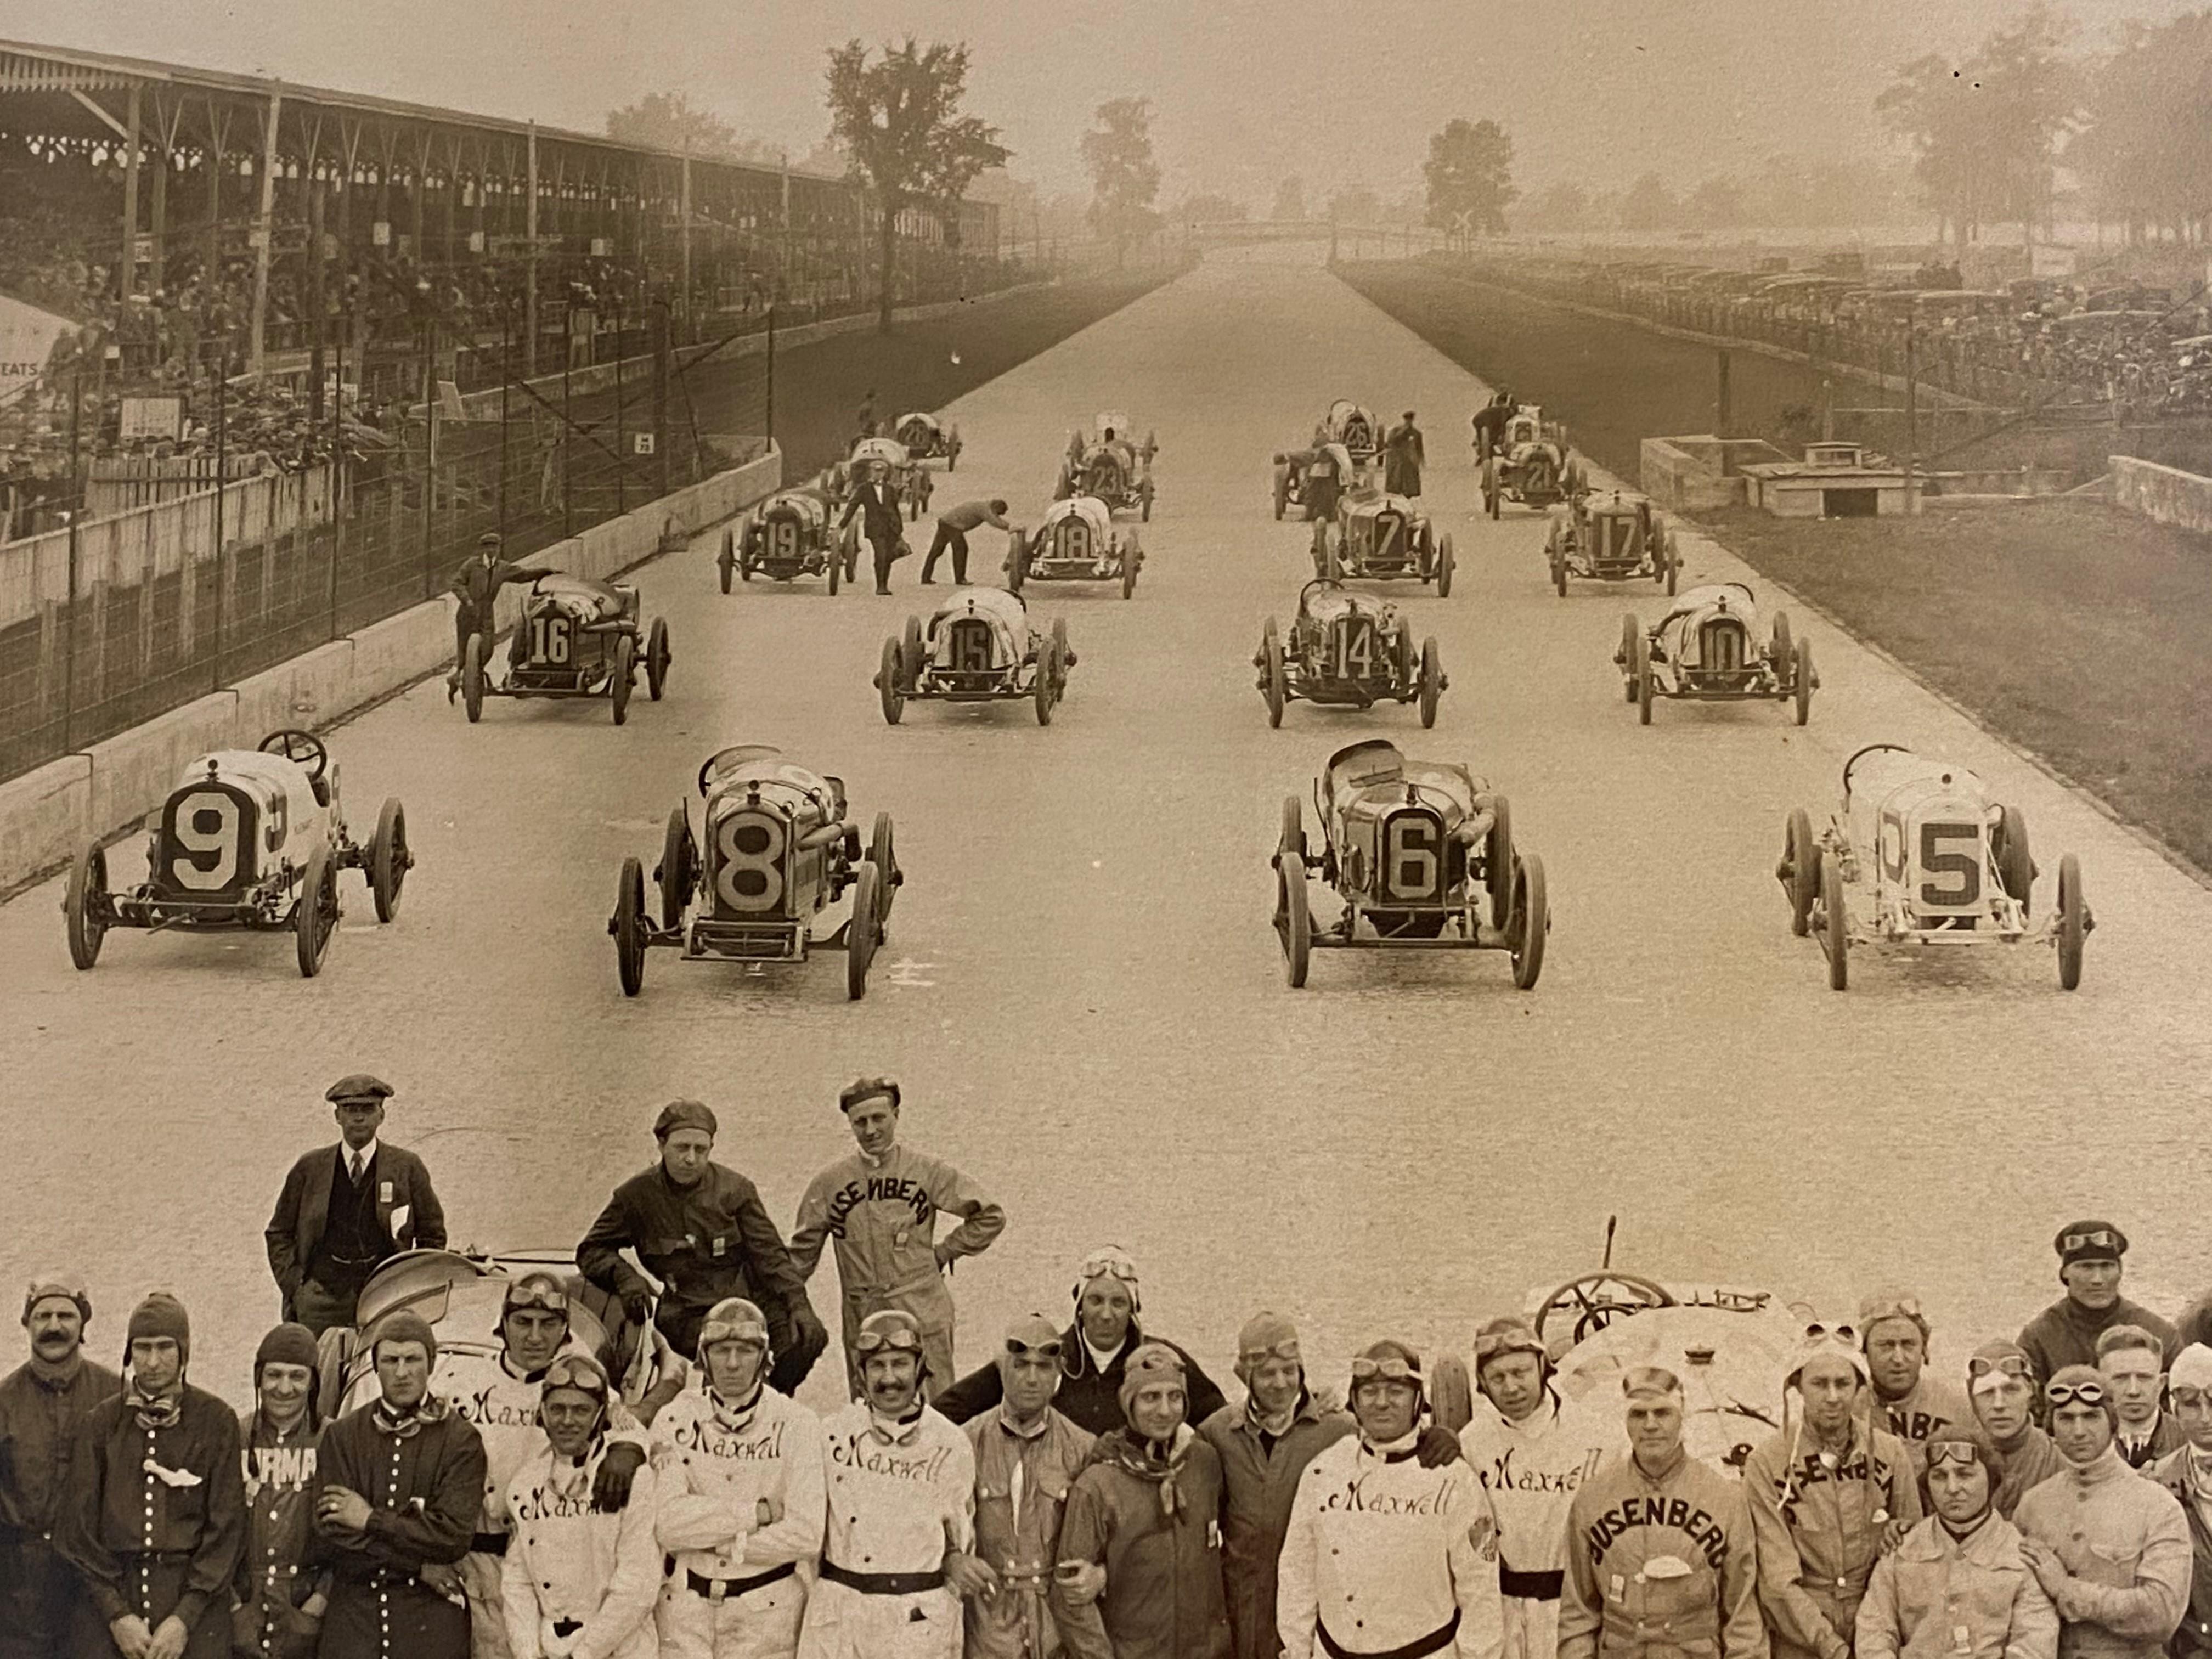 Paper Indianapolis 500 Panoramic Sepia Photograph of Drivers, Cars, & Mechanics, 1915